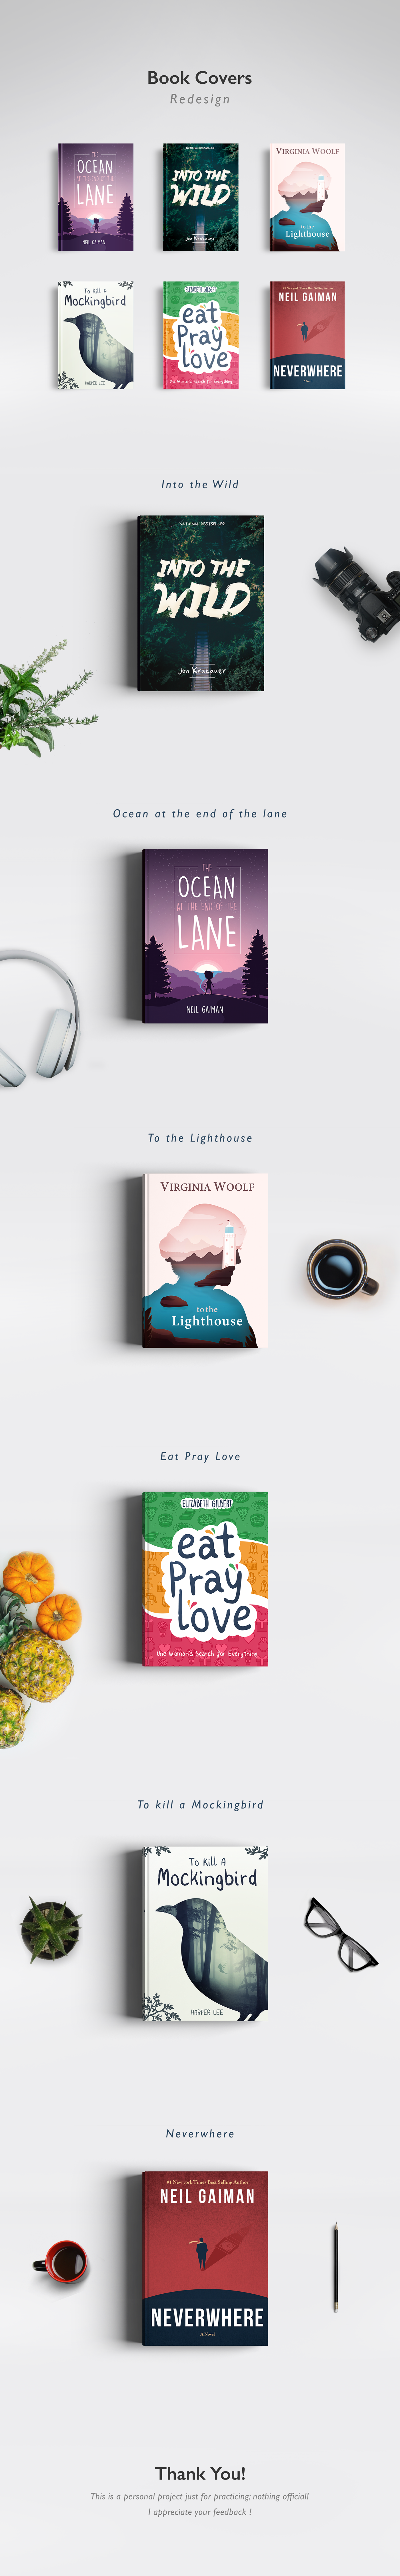 book covers into the wild neil gaiman Neverwhere books Ocean lighthouse mockingbird